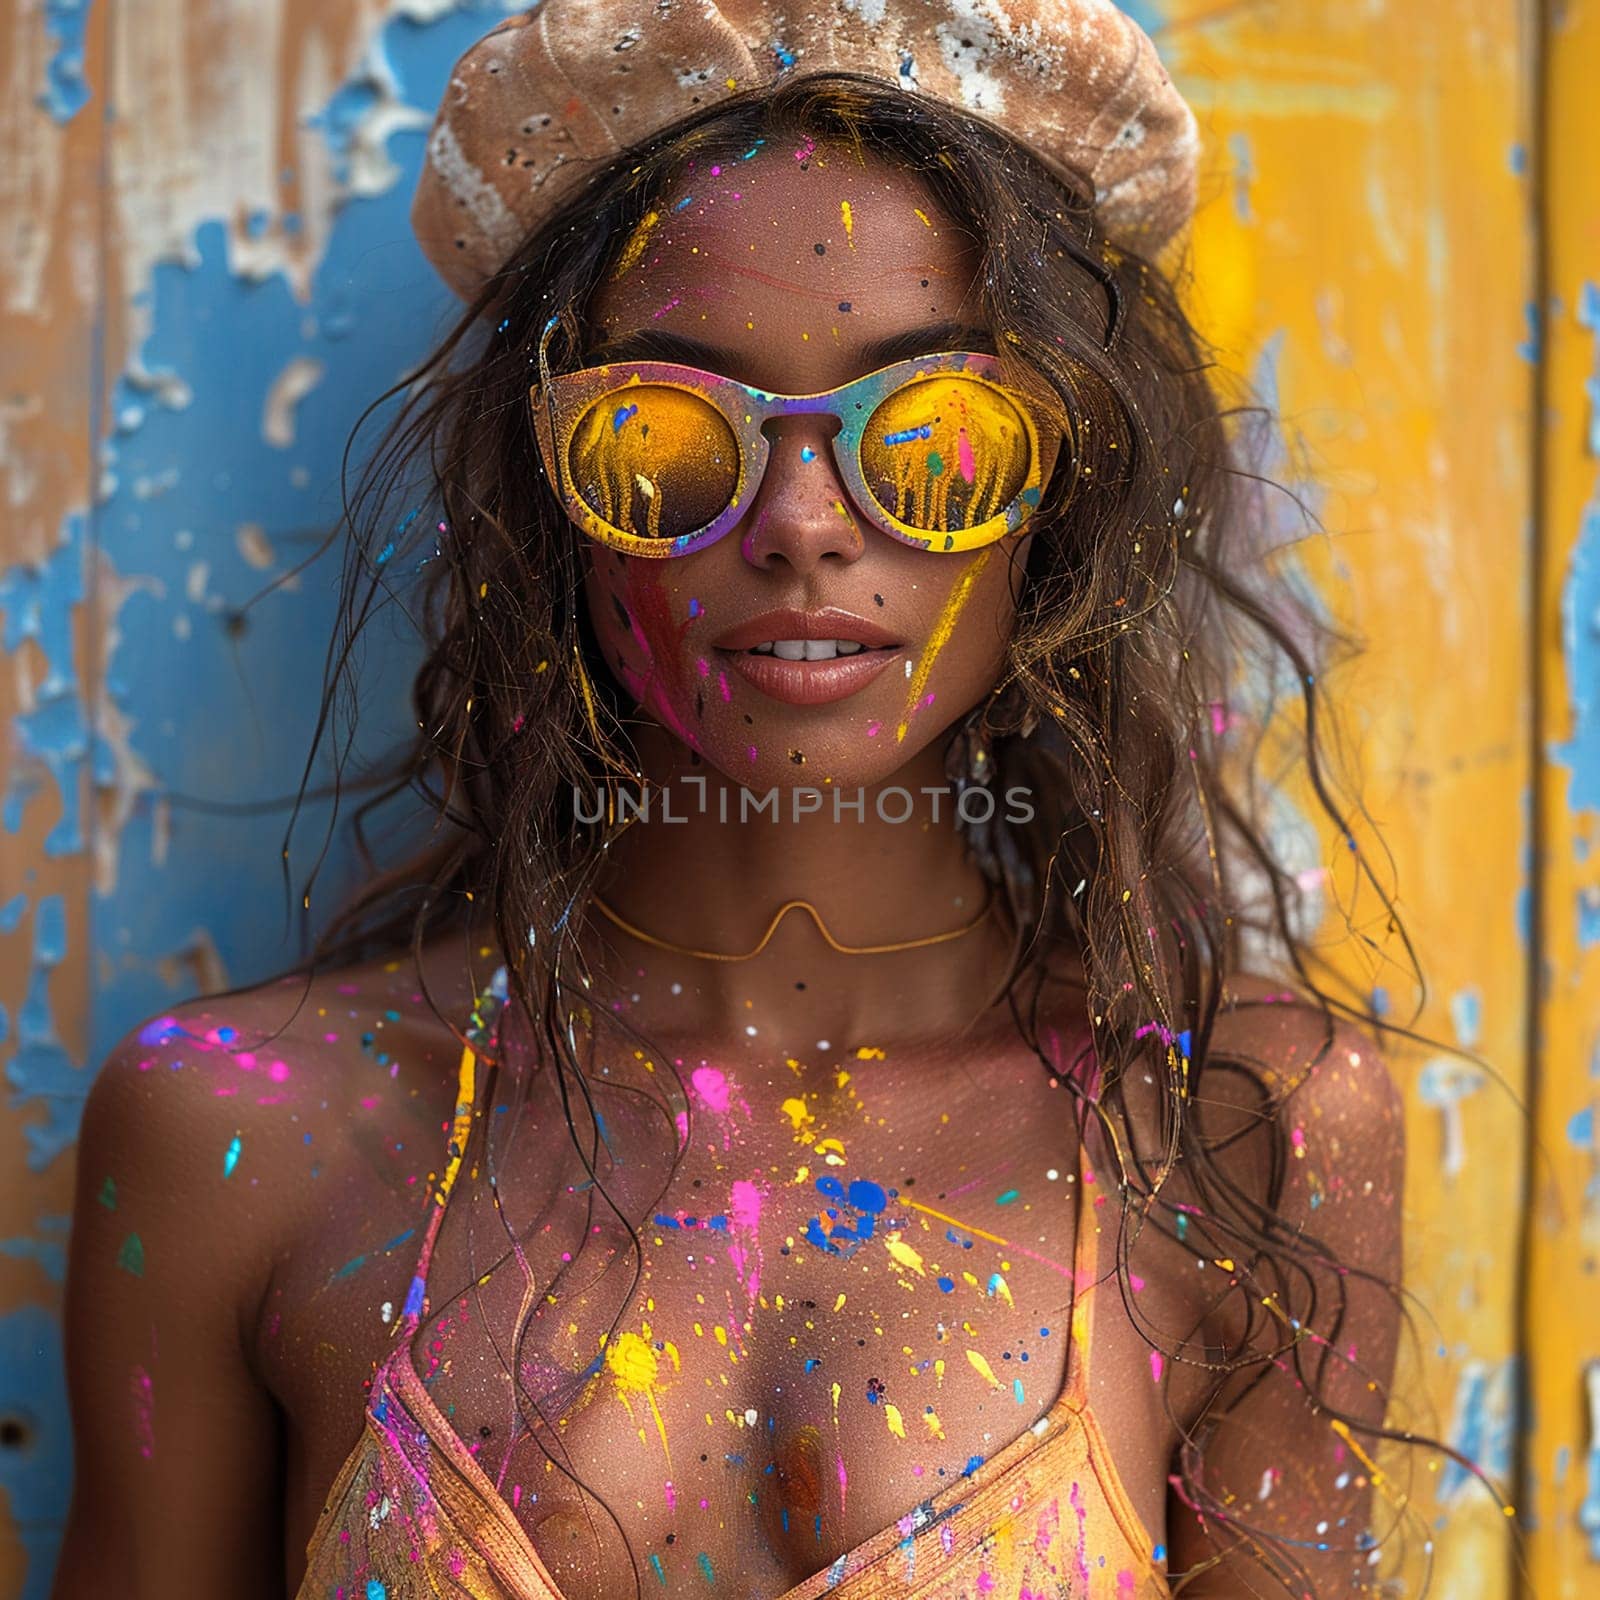 Editorial fashion photograph of avant-garde Holi festival attire with splashes of color.